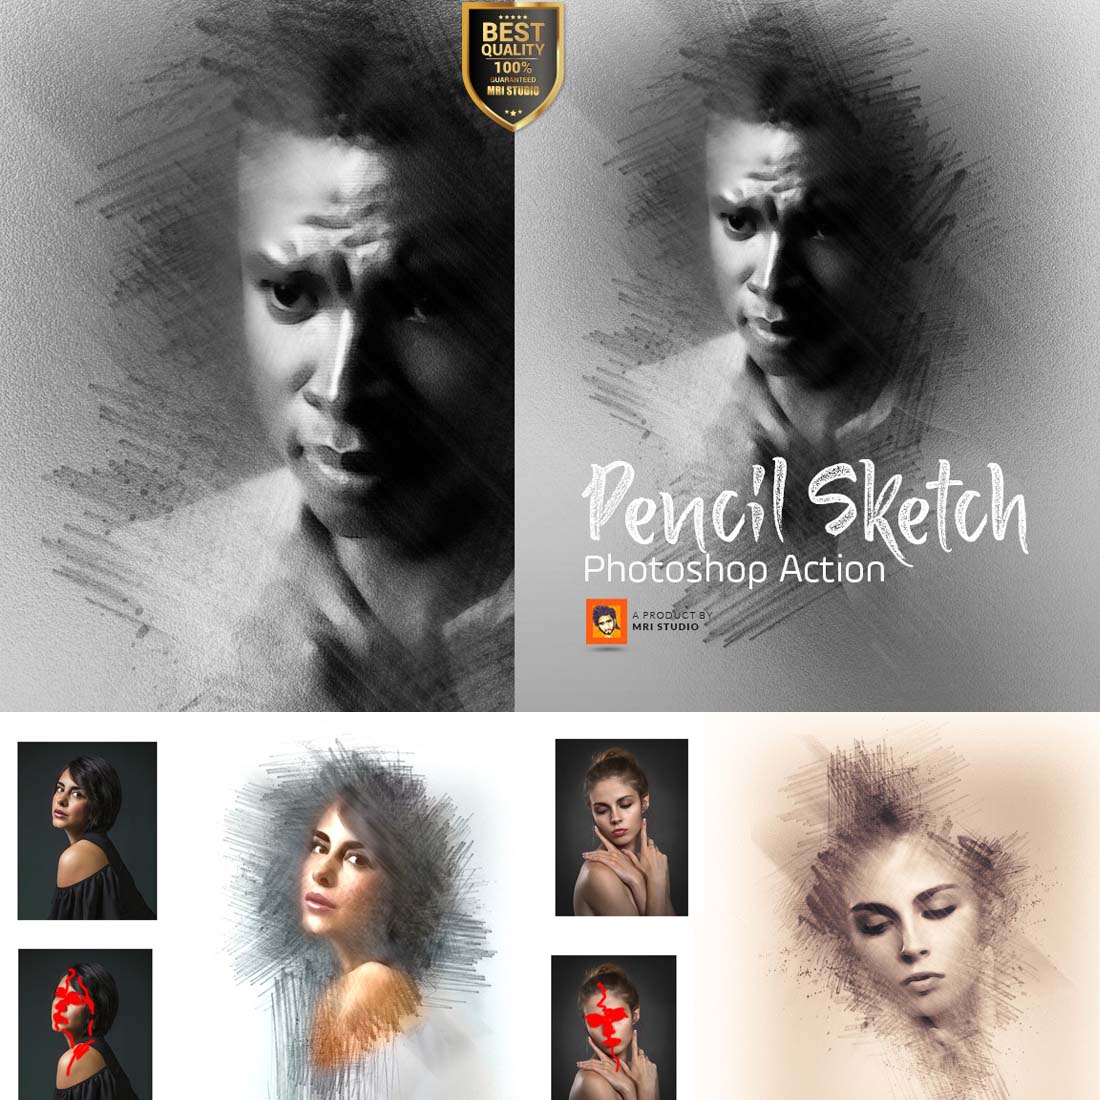 Pencil Sketch Photoshop Action cover image.